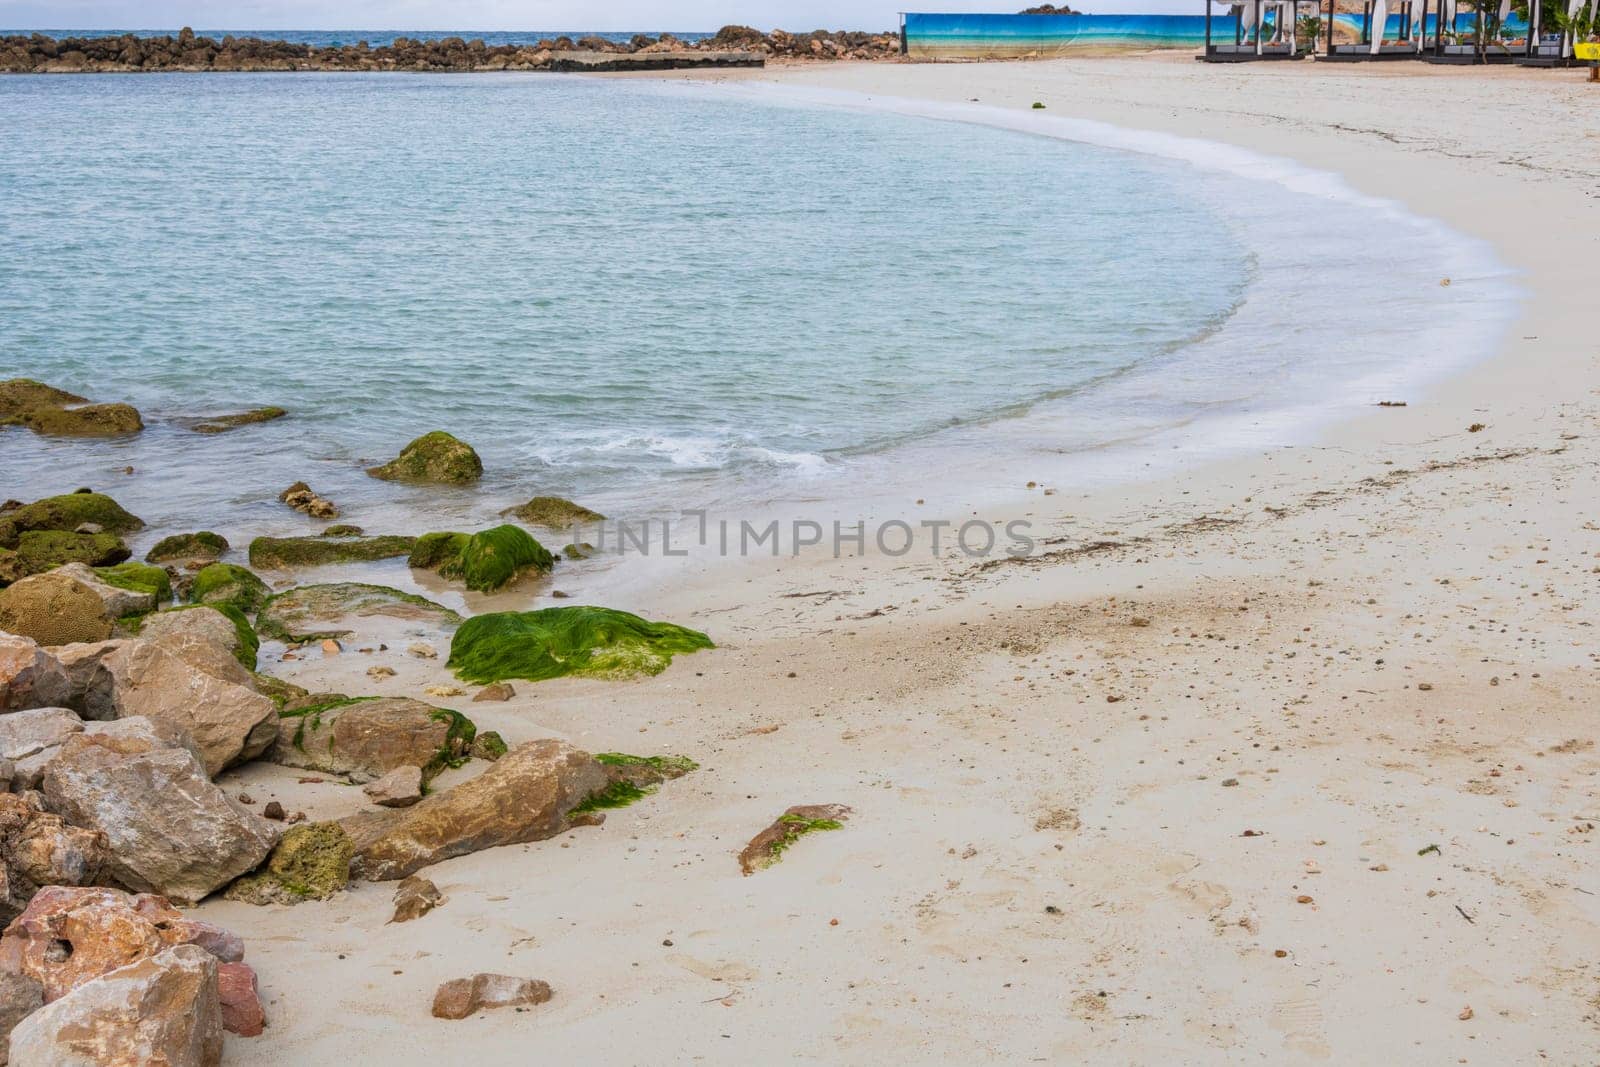 Labadee beach, Haiti, Caribbean Sea by vladispas